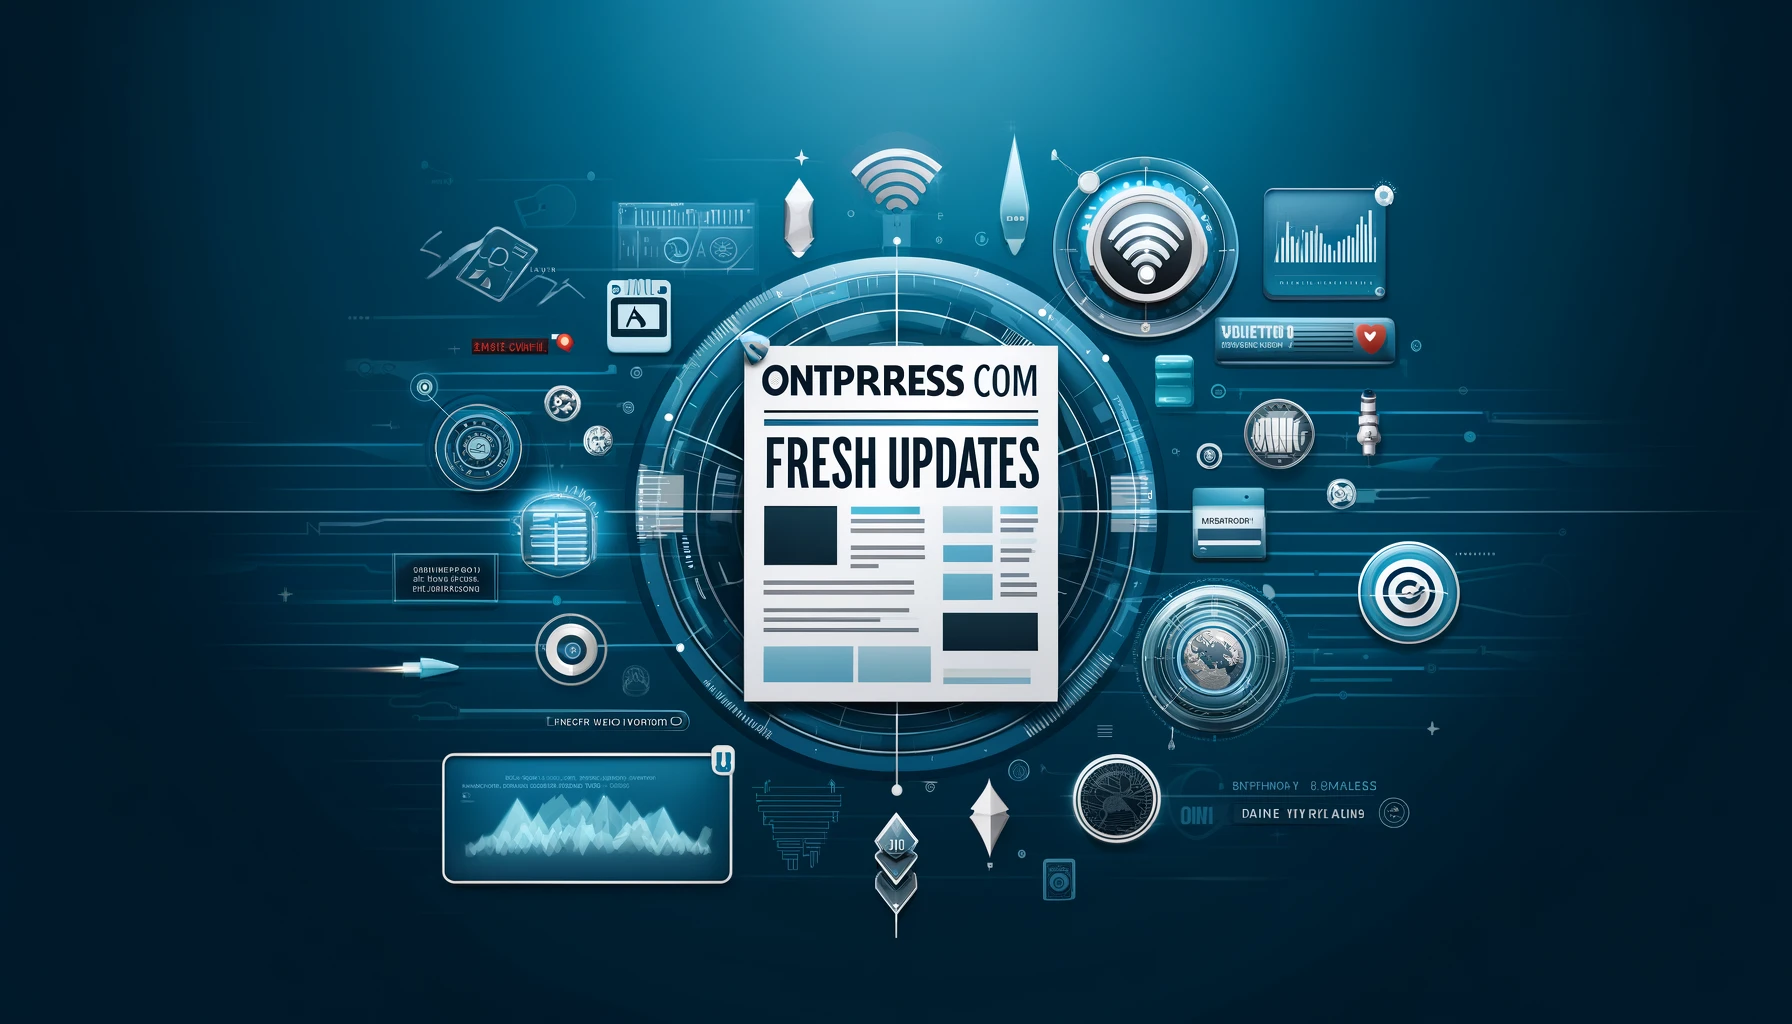 What is Ontpresscom Fresh Updates?